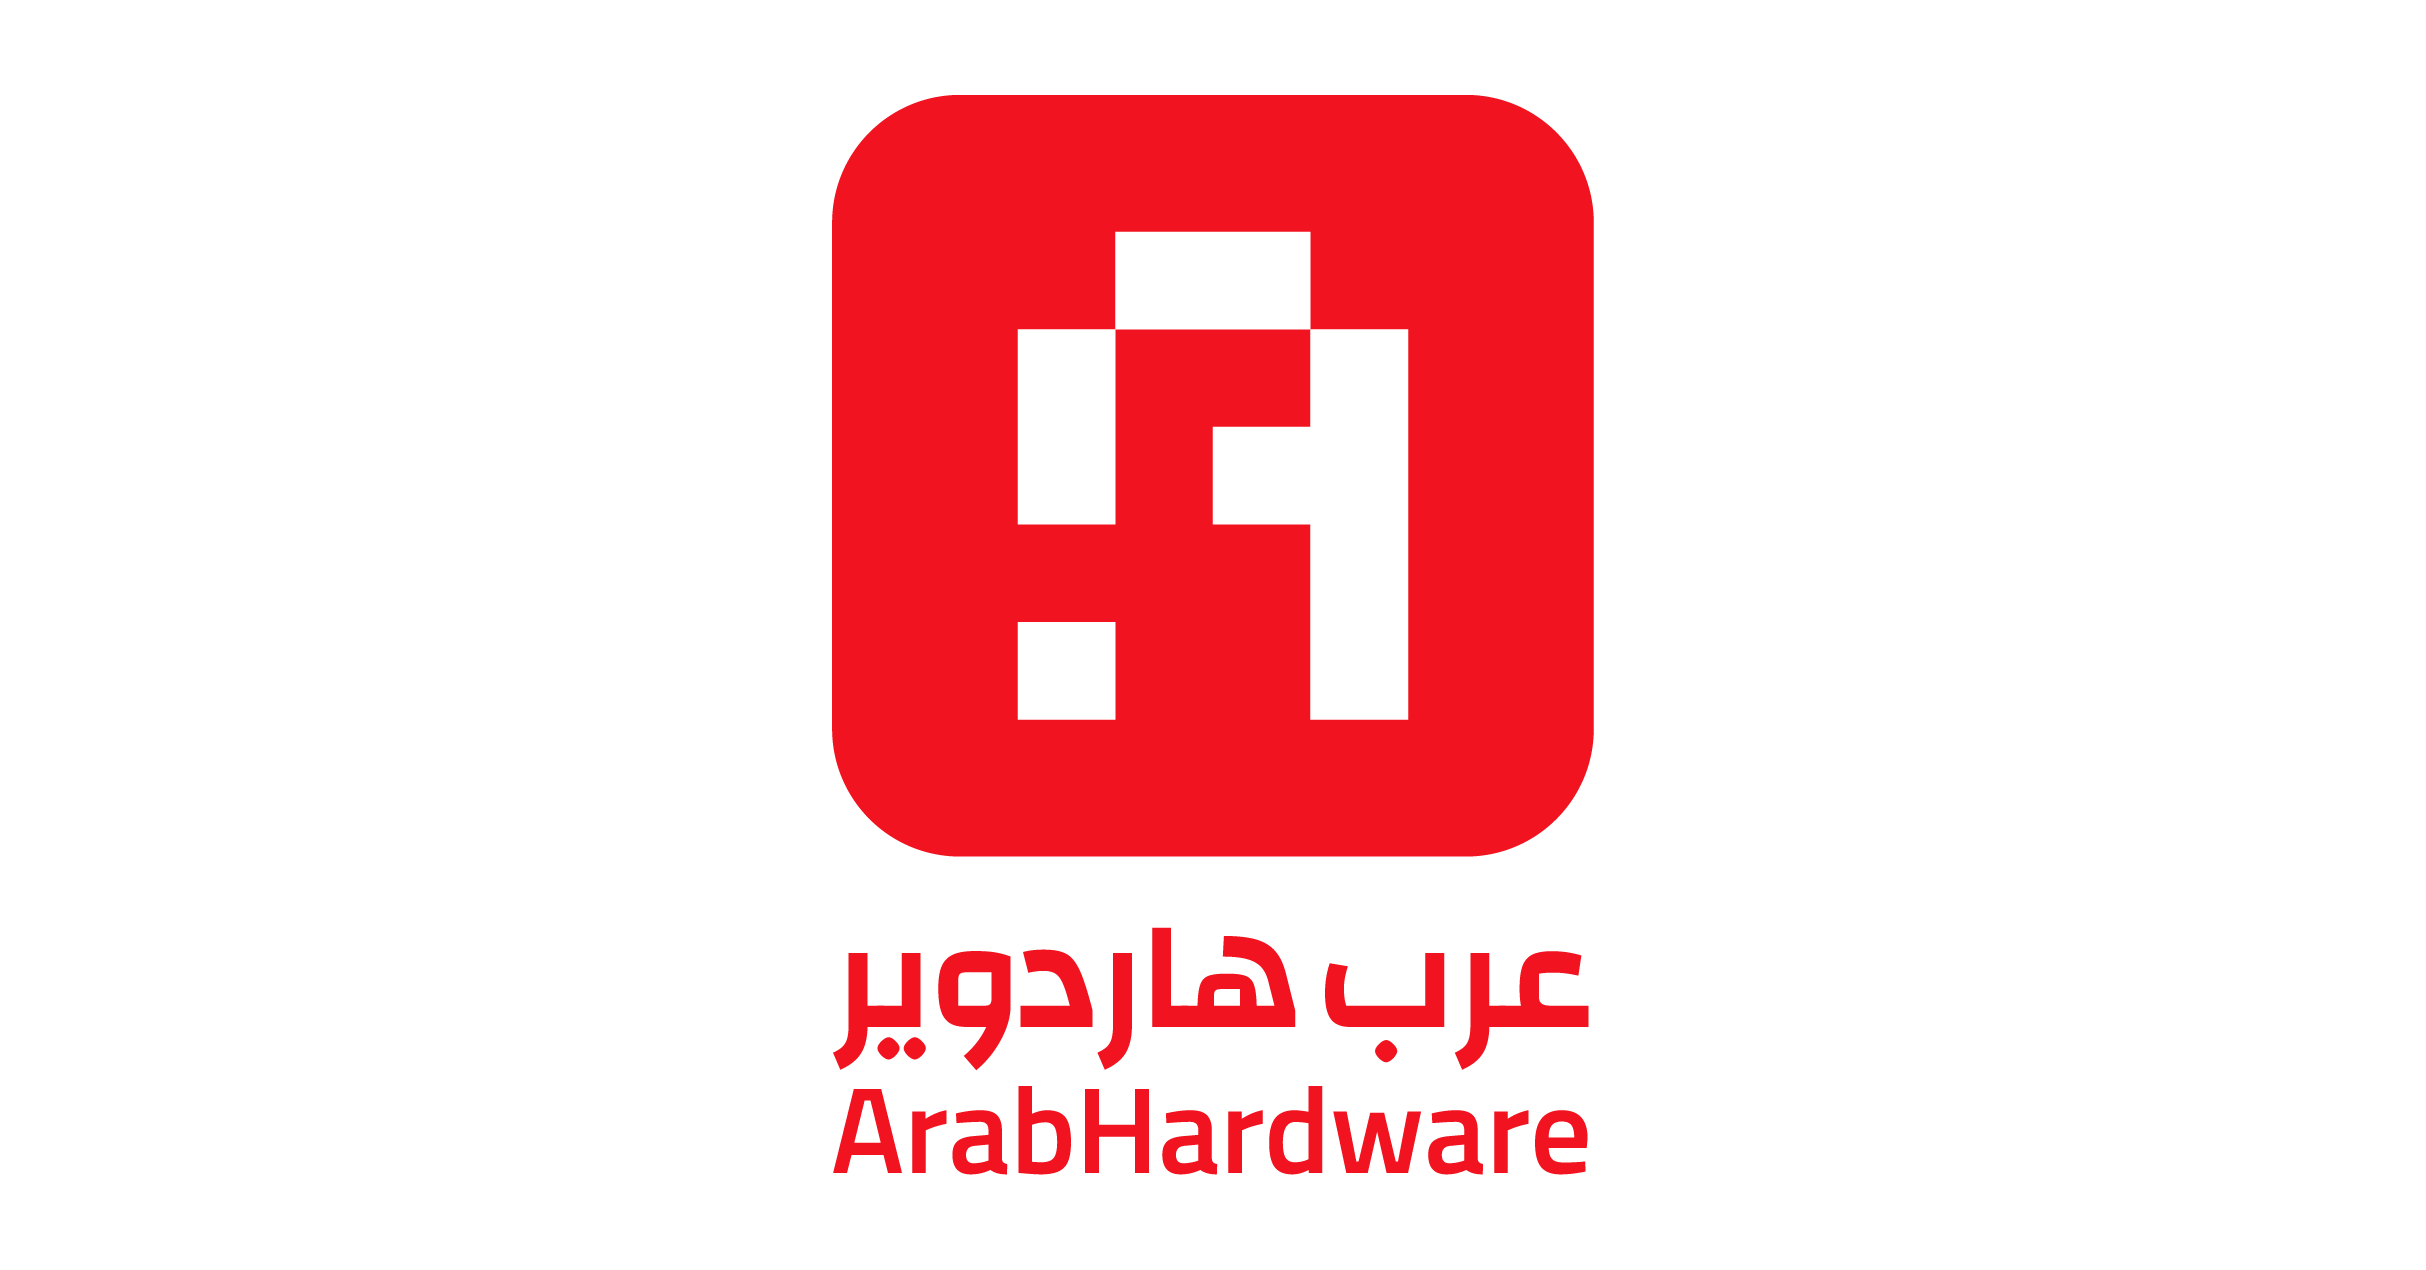 لوجو عرب هاردوير - Arabhardware L:ogo